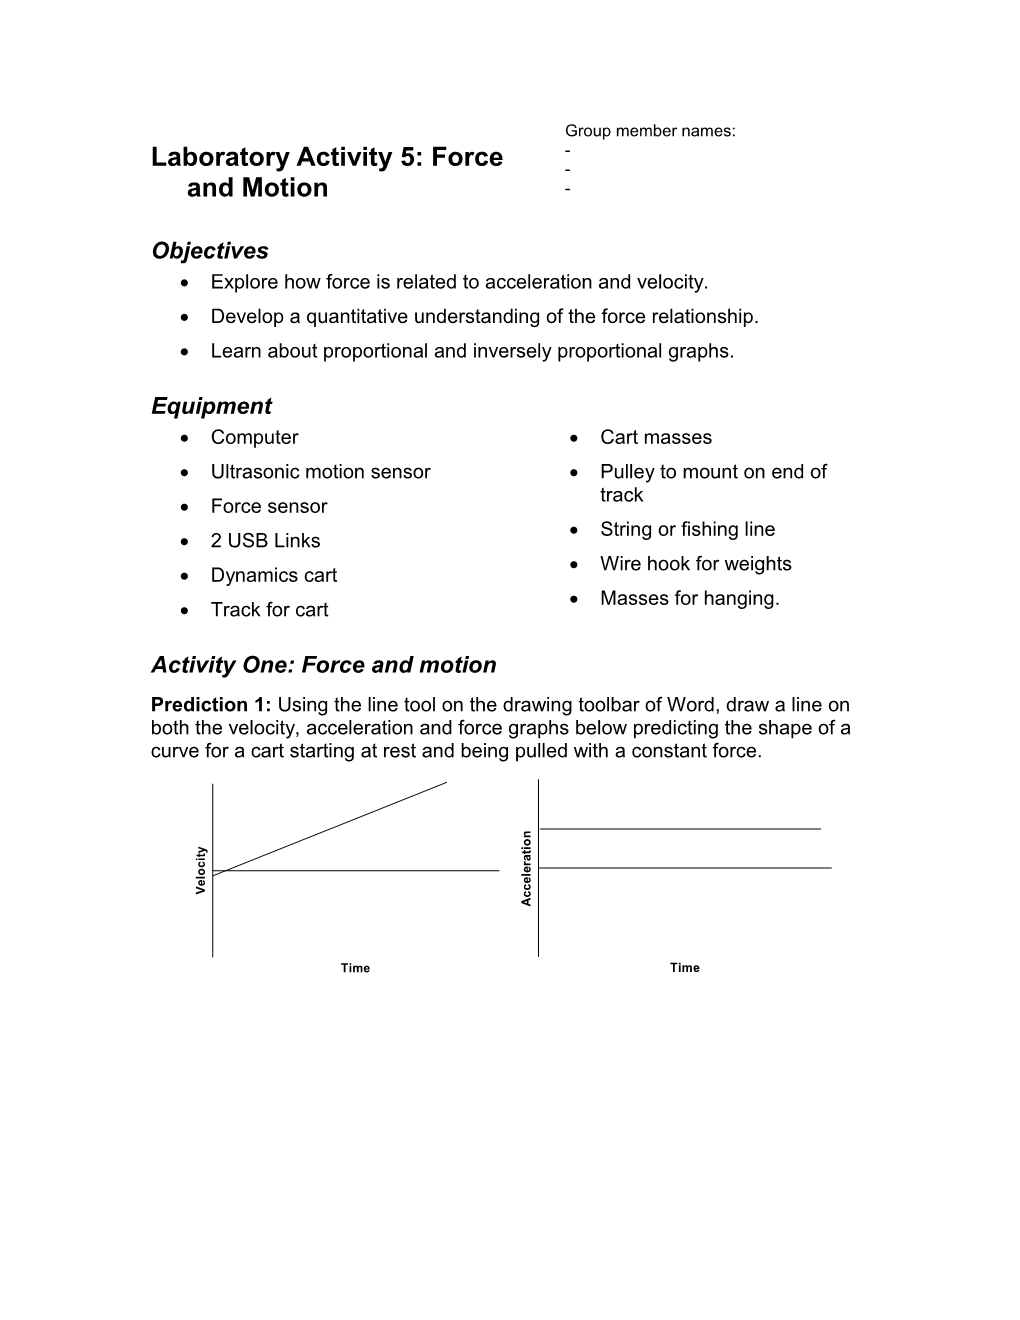 Laboratory Activity 1: Position Graphs